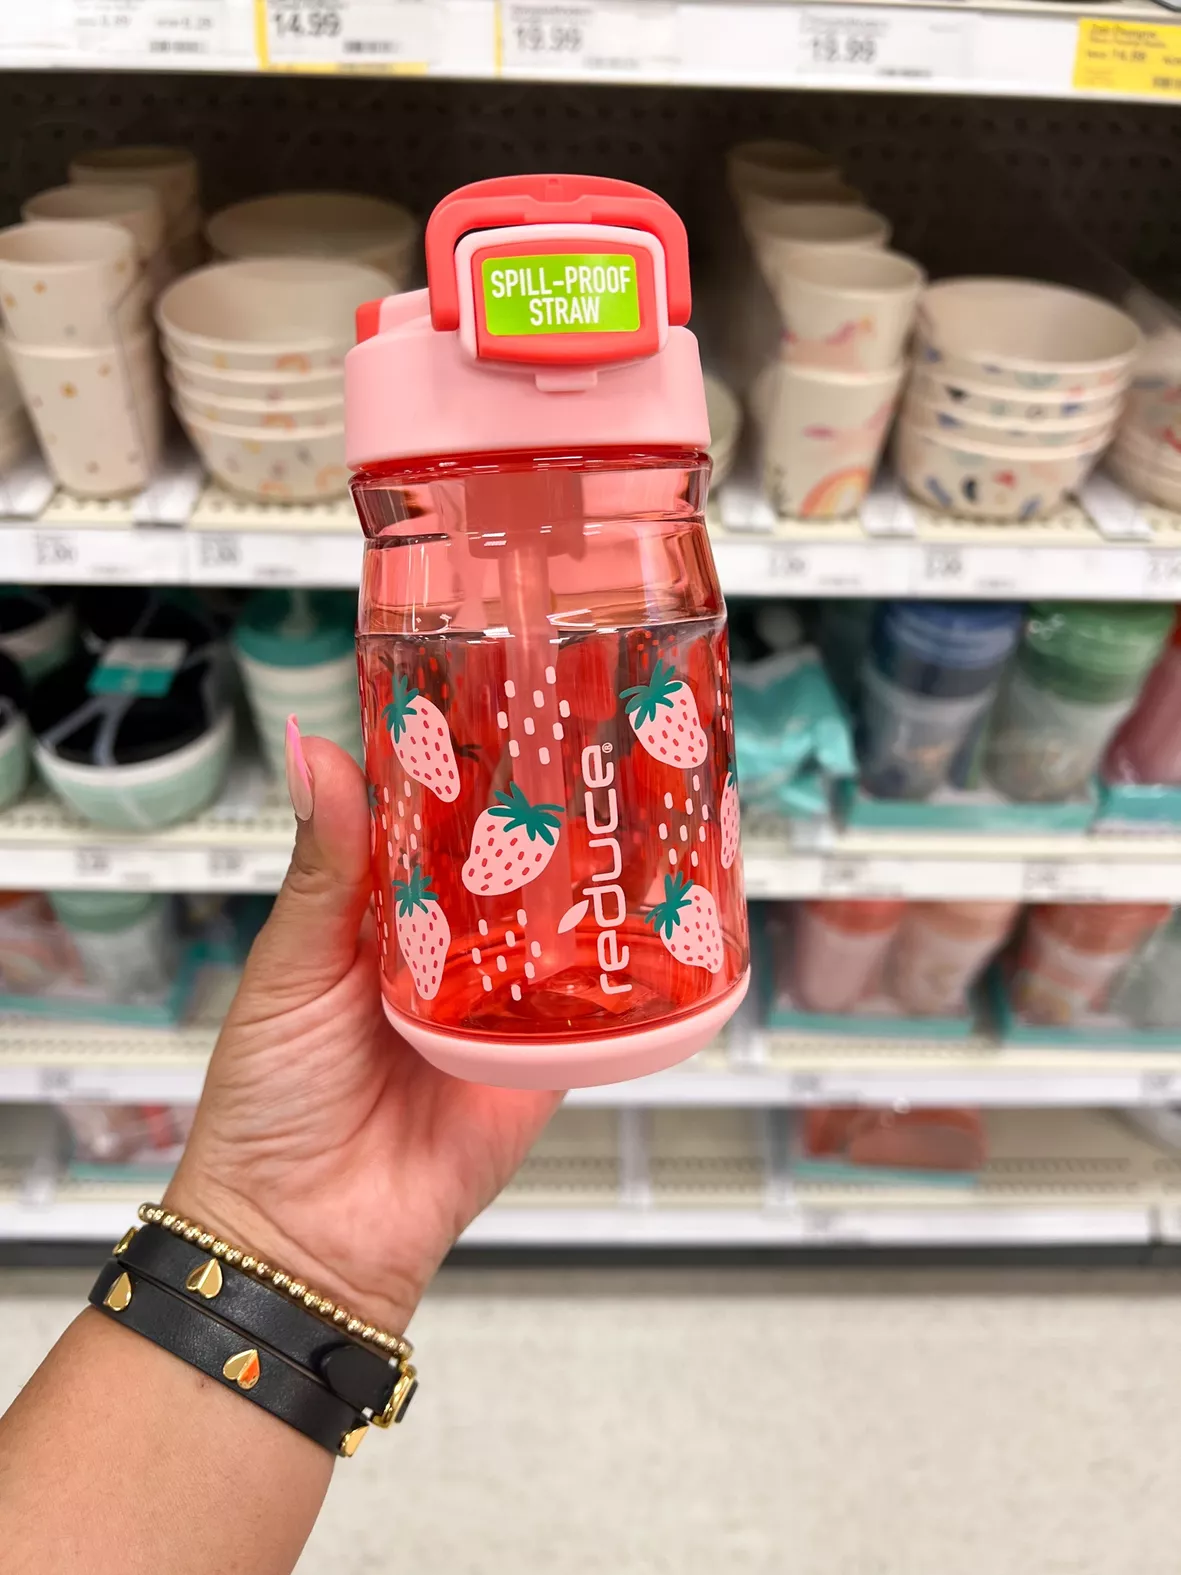 Ello 16oz 2pk Plastic Stratus Kids' Water Bottles : Target